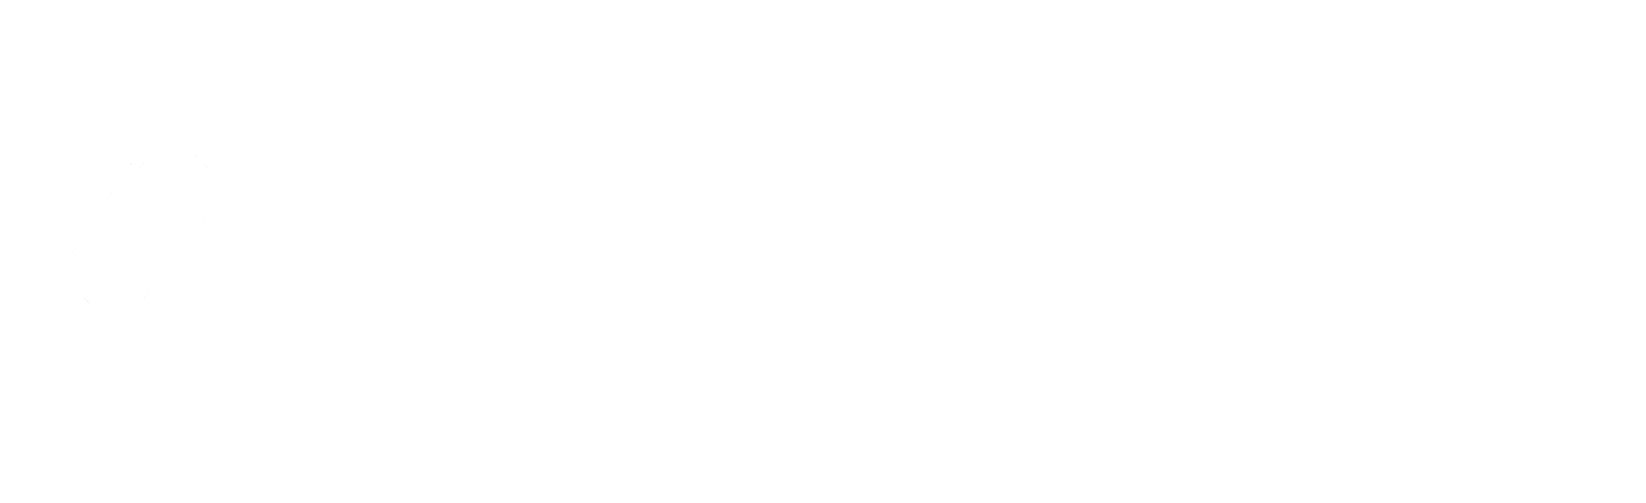 Synergy European